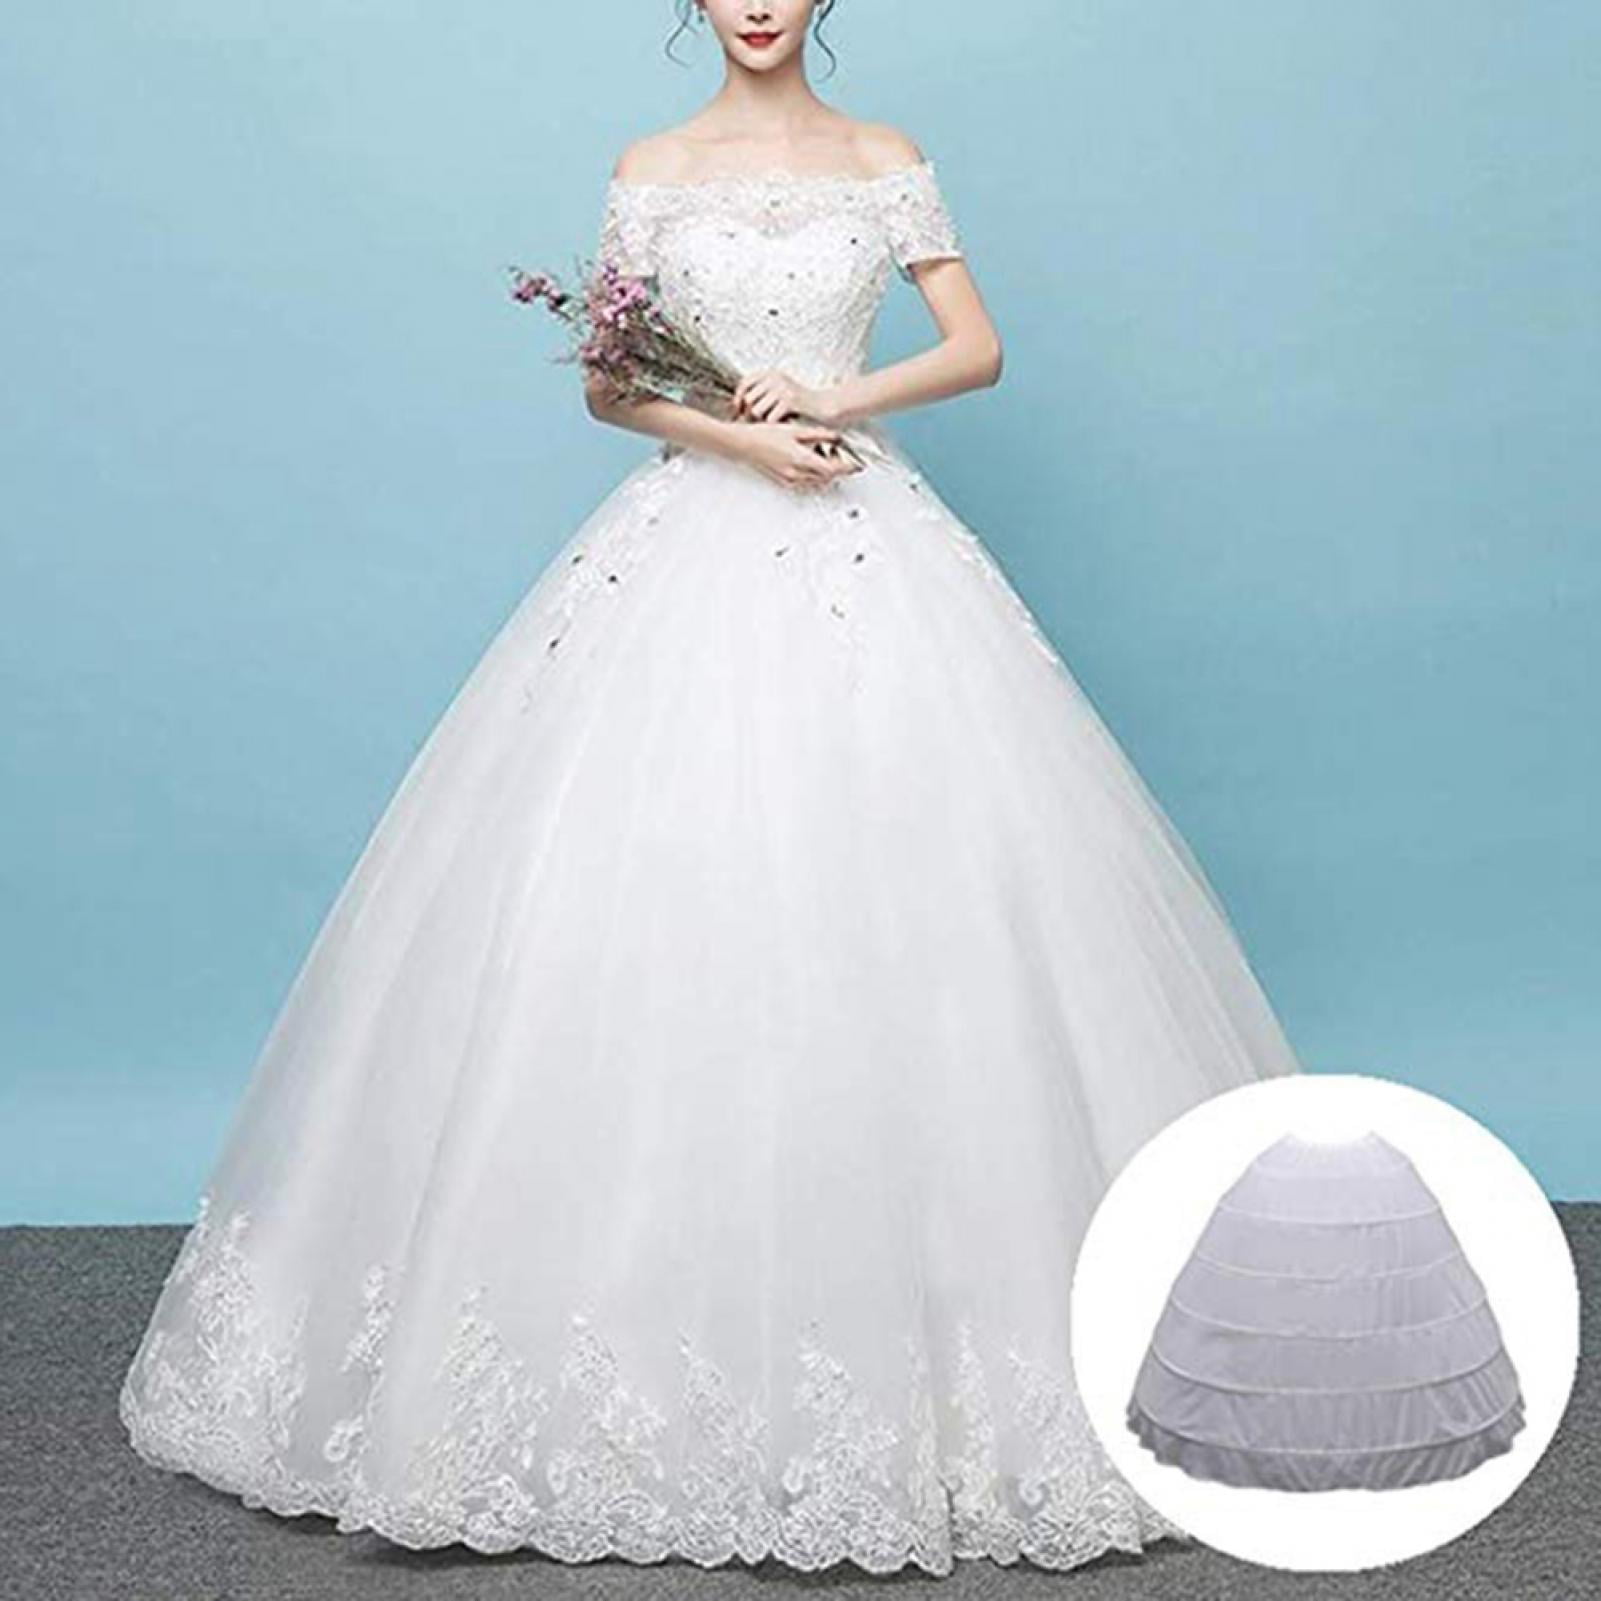 WHITE 6-HOOP BRIDAL WEDDING GOWN PETTICOAT SLIP  crinoline  wedding dress 